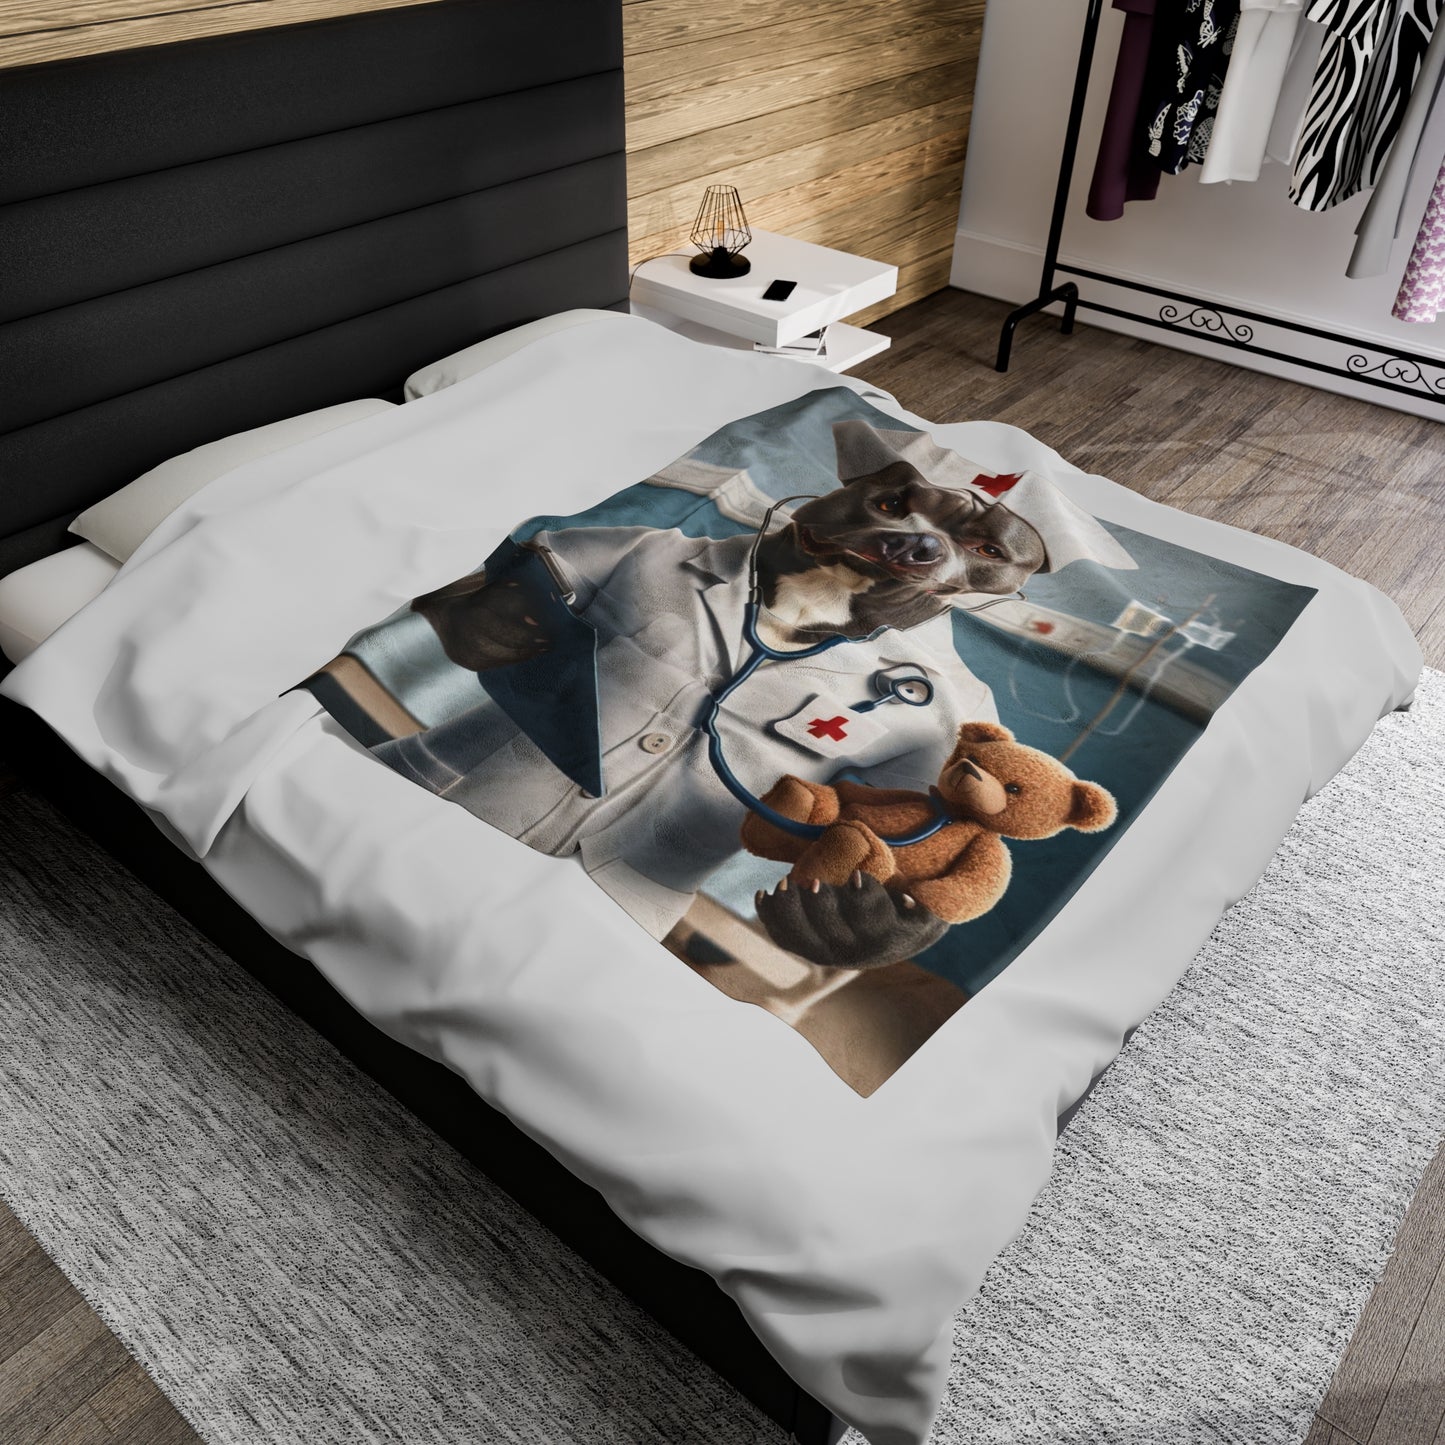 Cute Funny Nurse Doctor PitBull Dog Velveteen Plush Blanket, Dog themed bedding design, Beautiful Dog Cozy throw, Dog lovers kids Decor